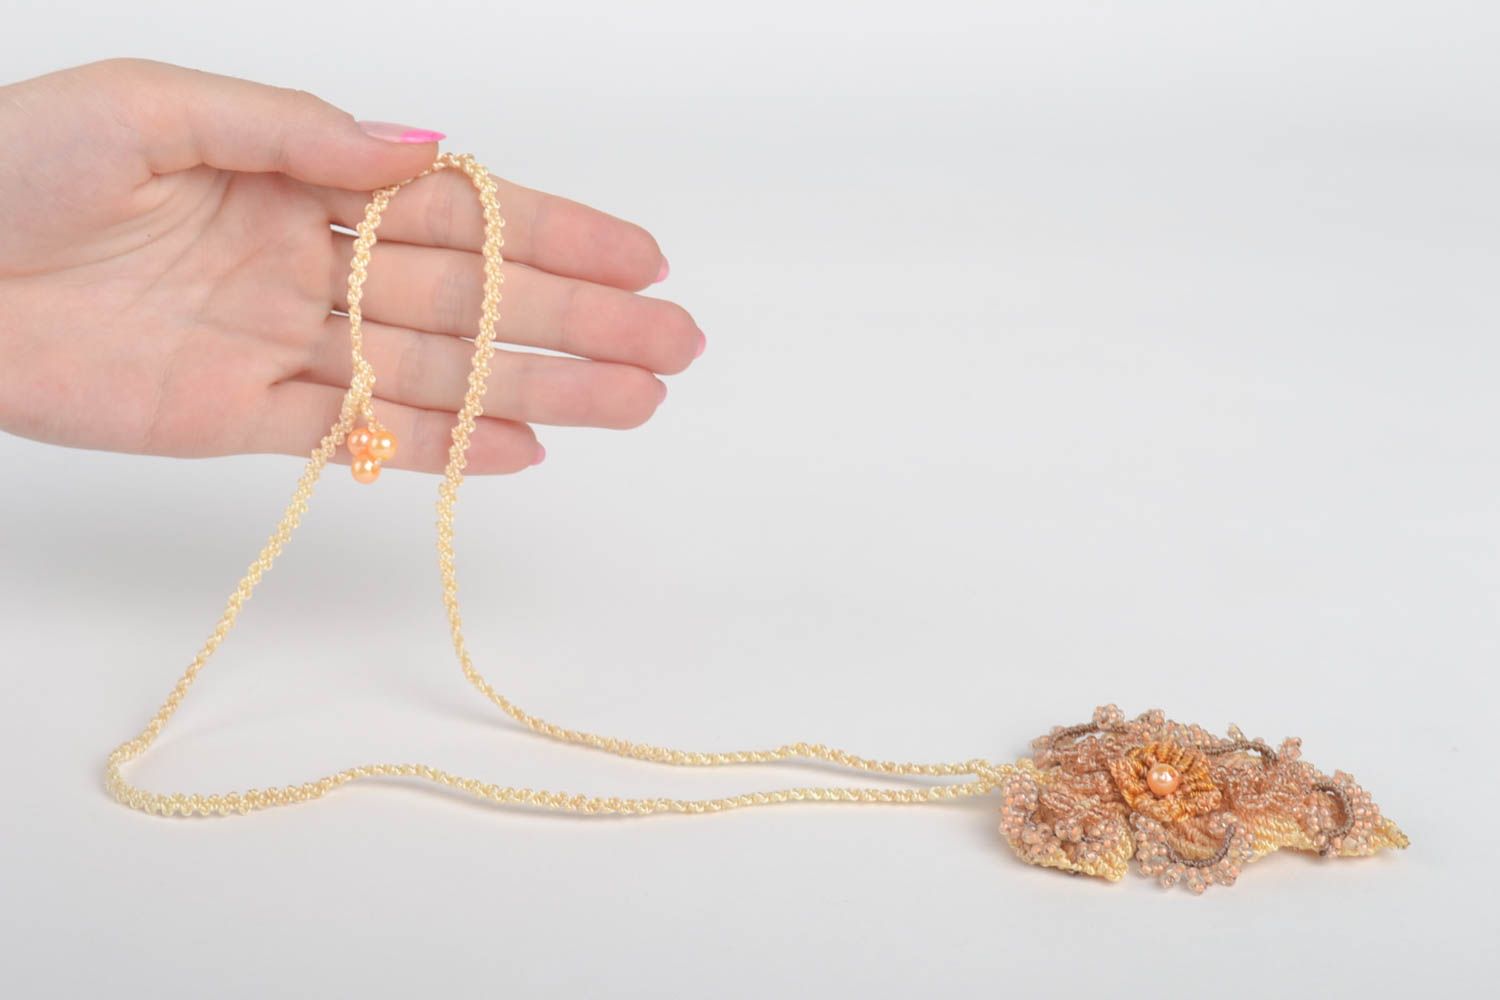 Handmade pendant designer pendant macrame jewelry unusual gift beads pendant photo 5